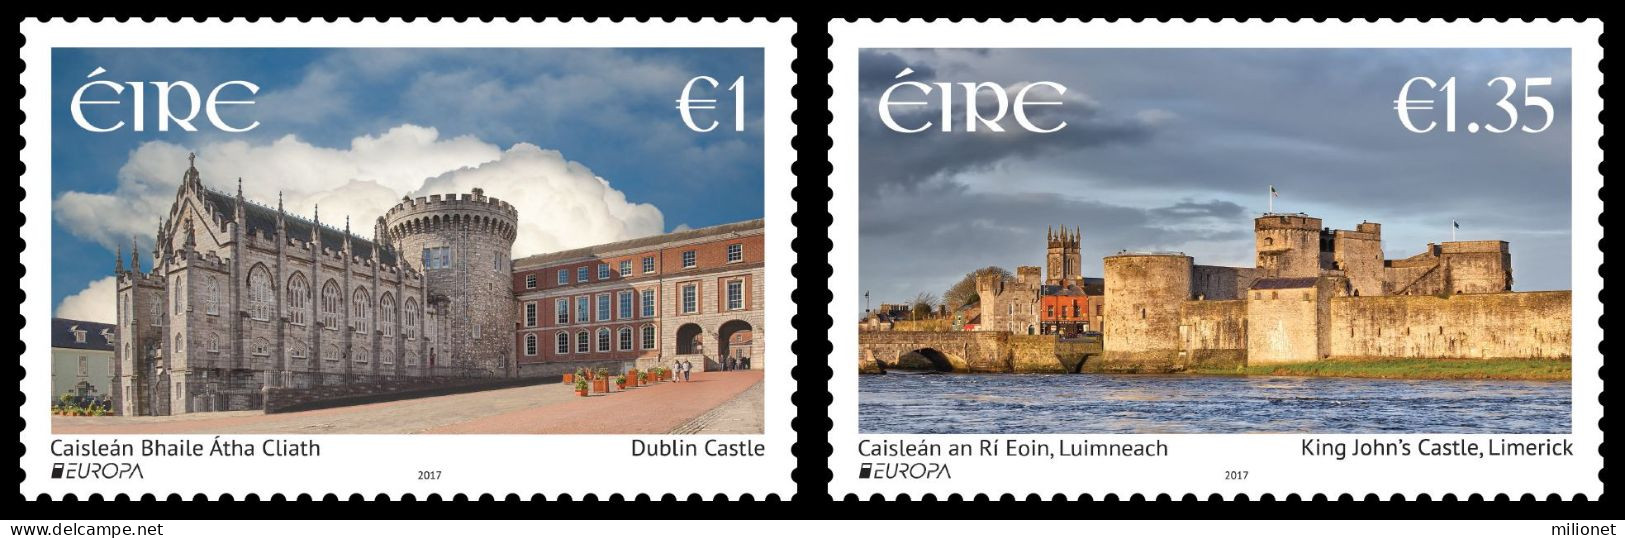 SALE!!! IRELAND IRLANDA IRLANDE IRLAND 2017 EUROPA Castles 2 Stamps Set MNH ** - 2017